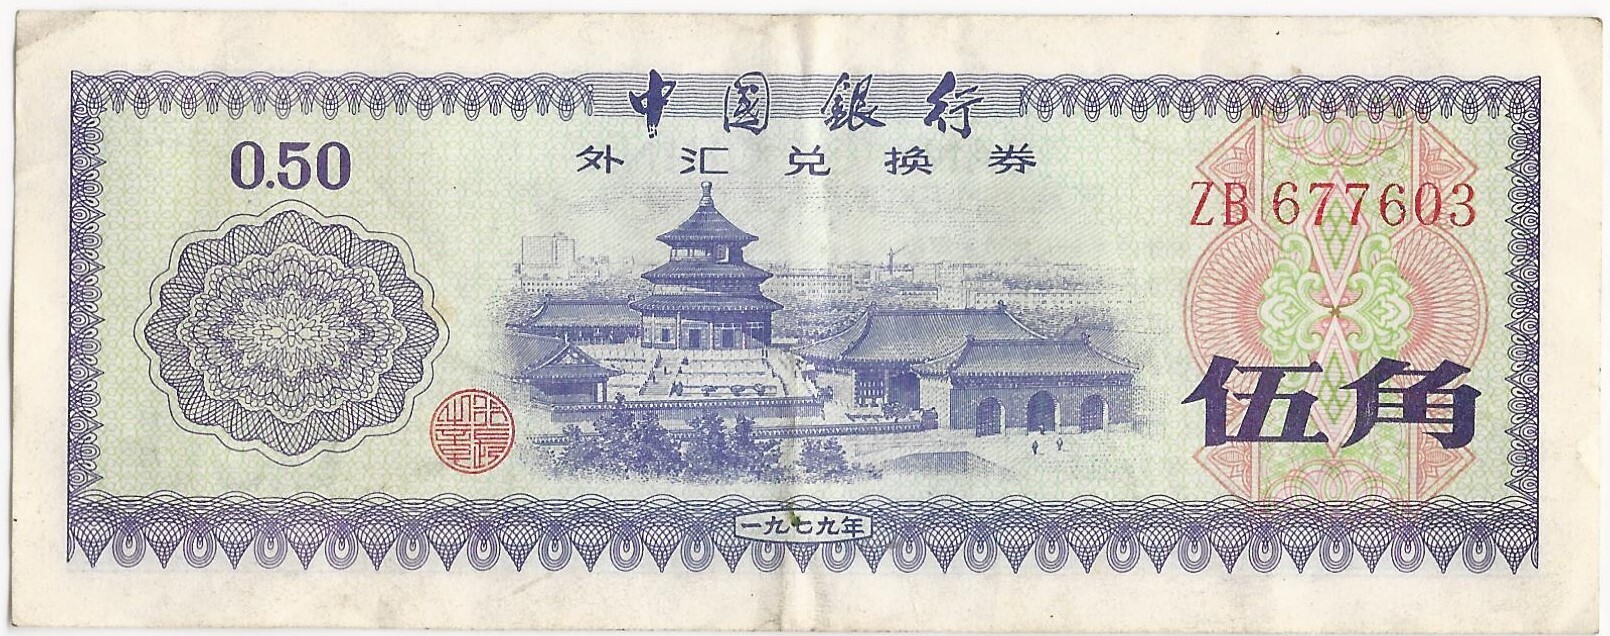 1980 Shanghai Post Office Packet 上海四川路桥邮电支局中国邮票 